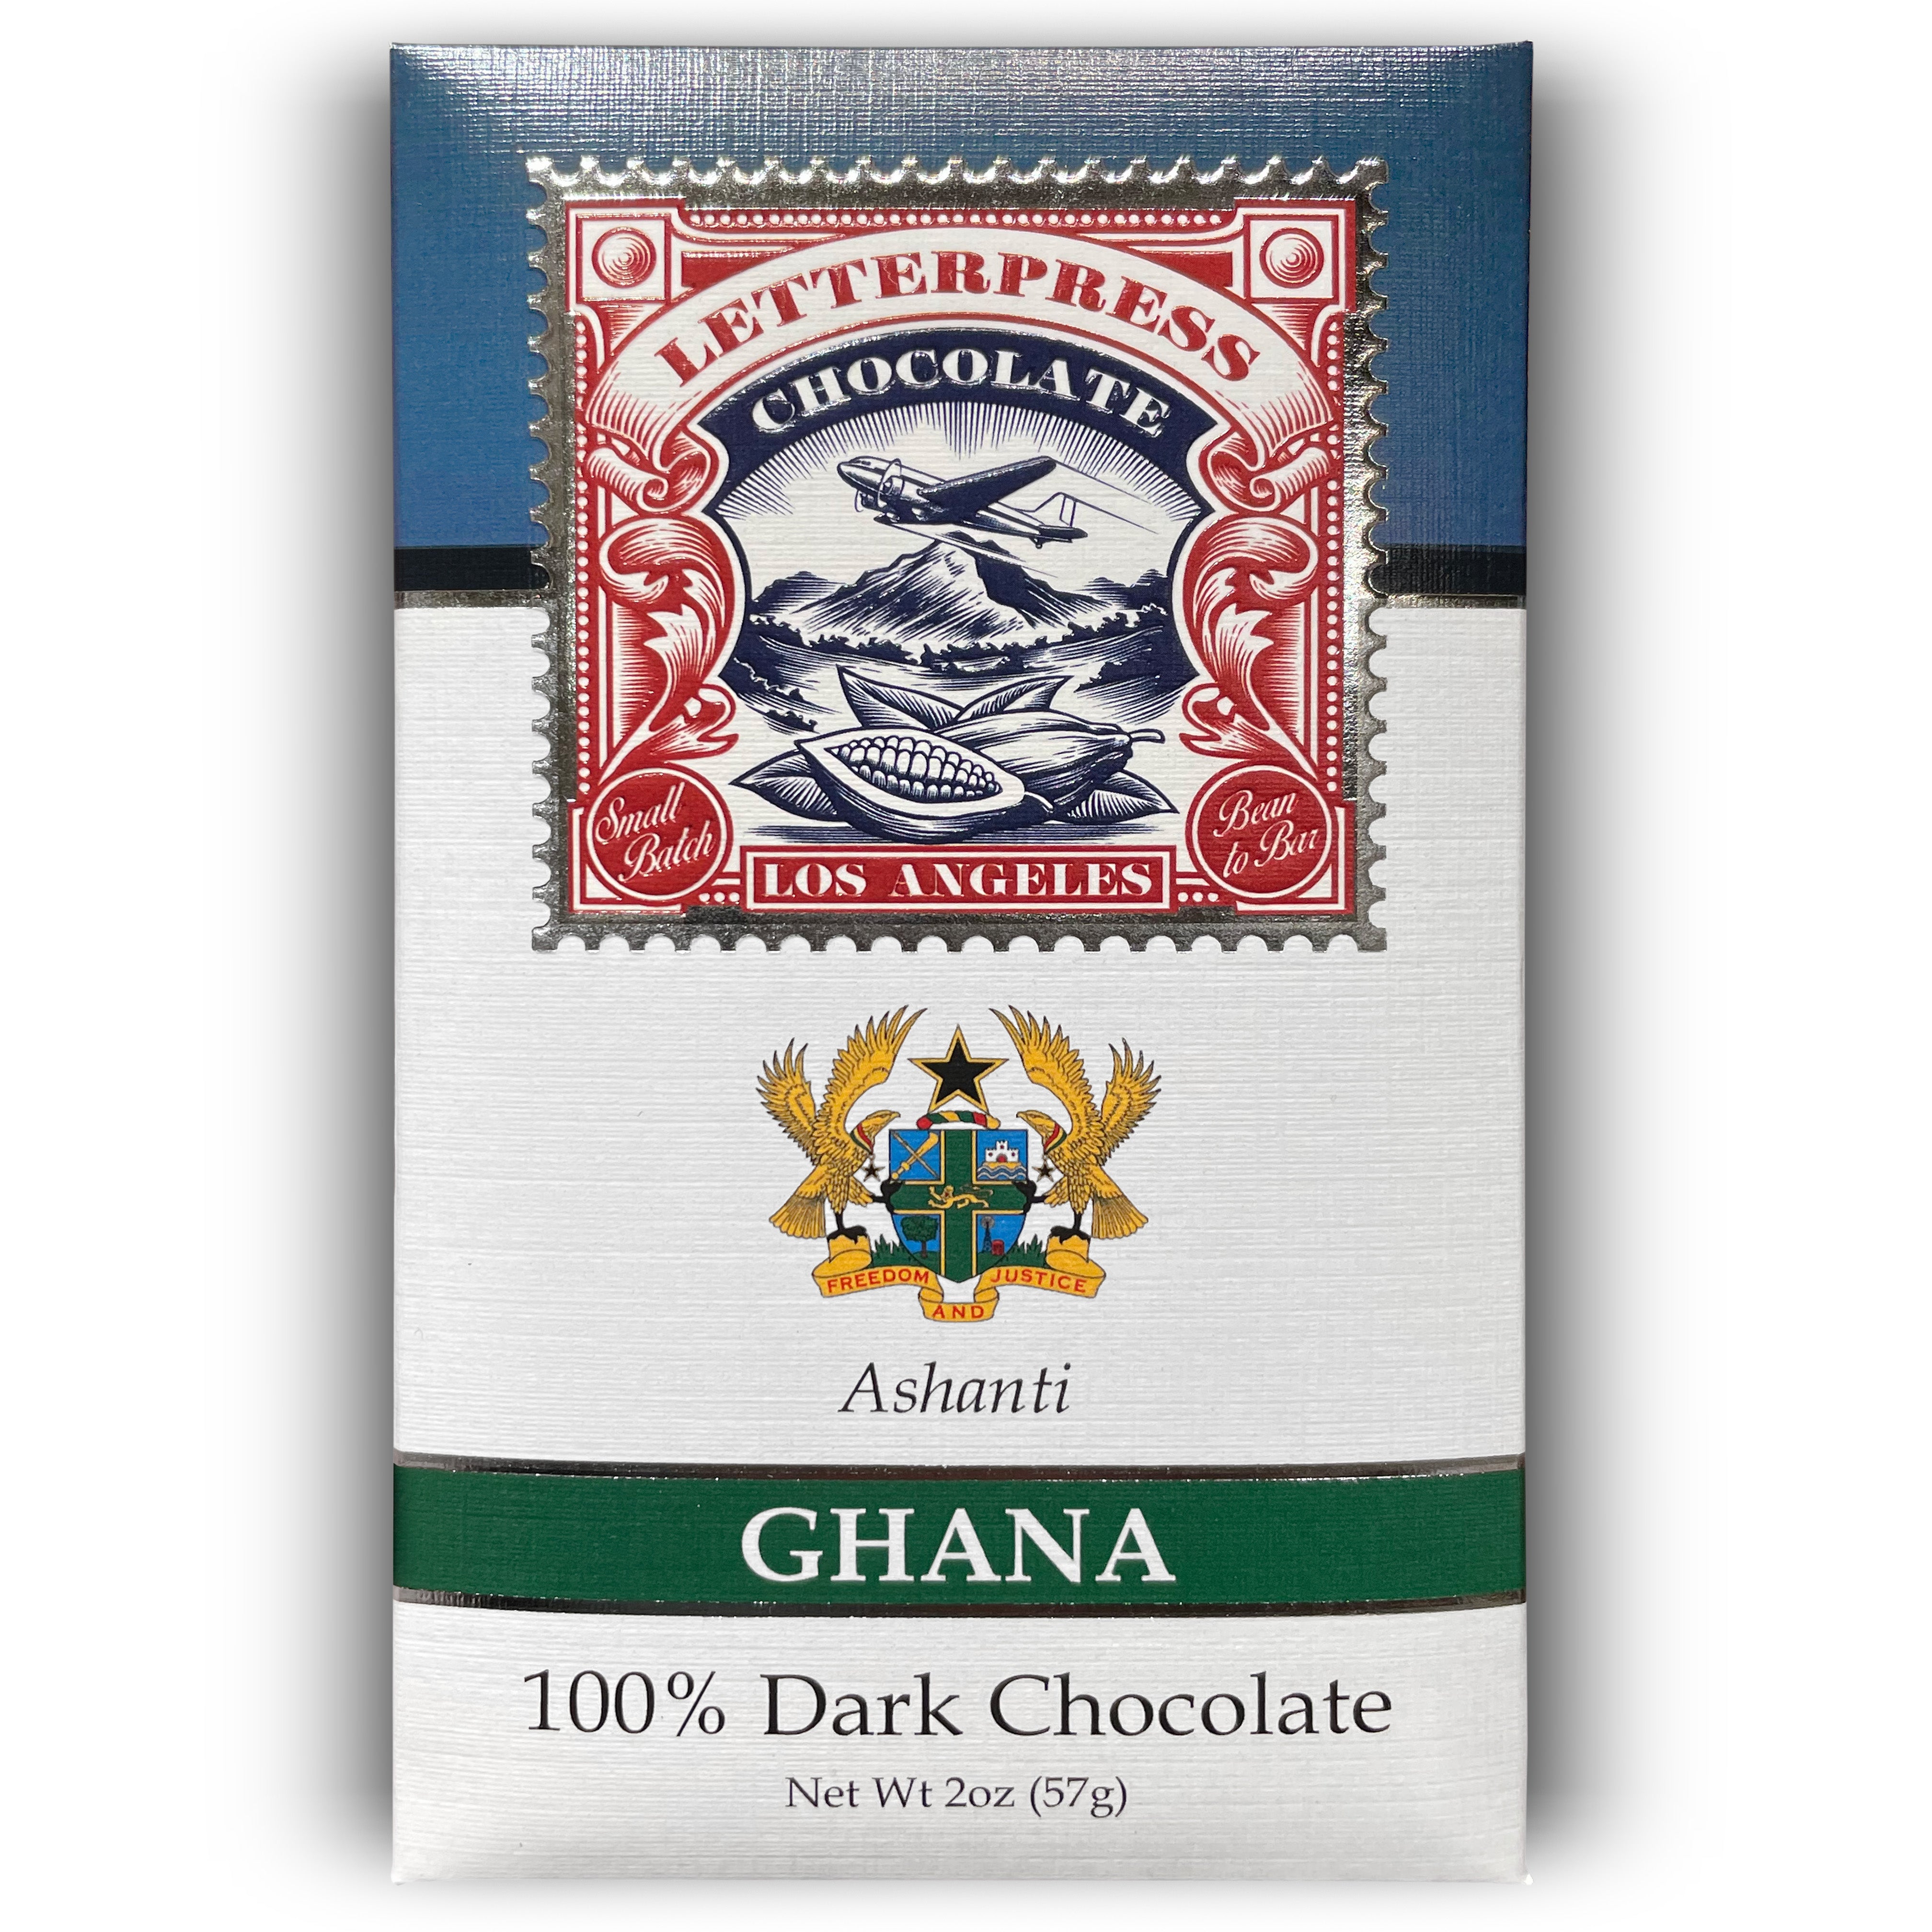 Ghana 100% Dark Chocolate bar packaging on white background